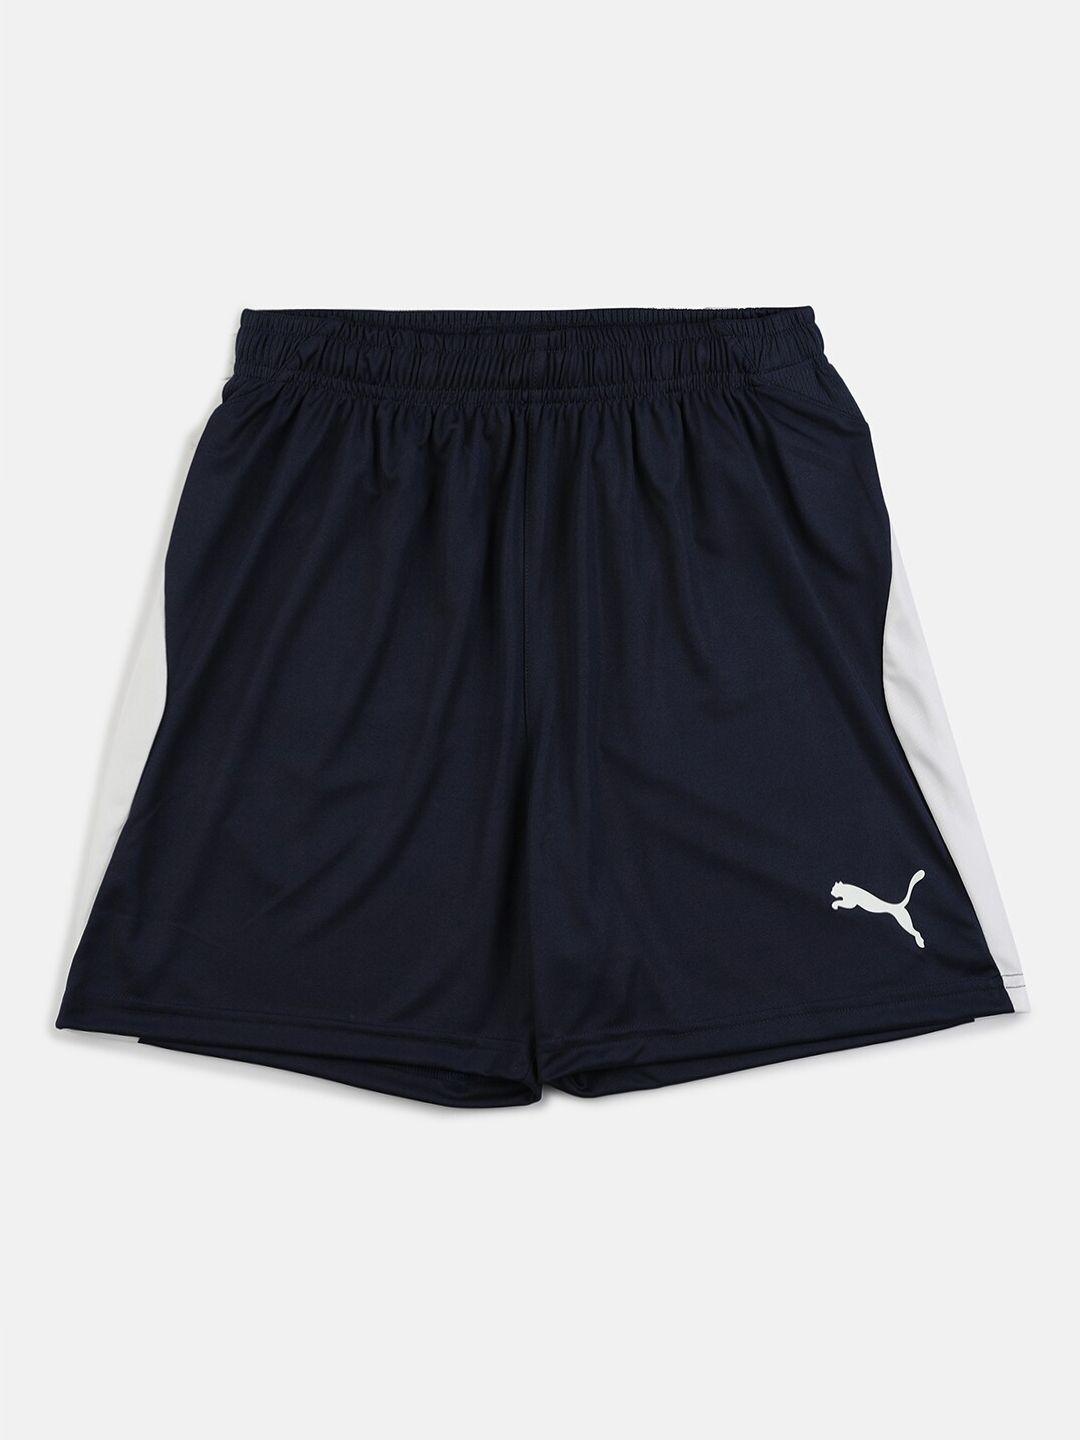 puma unisex kids navy blue outdoor sports shorts